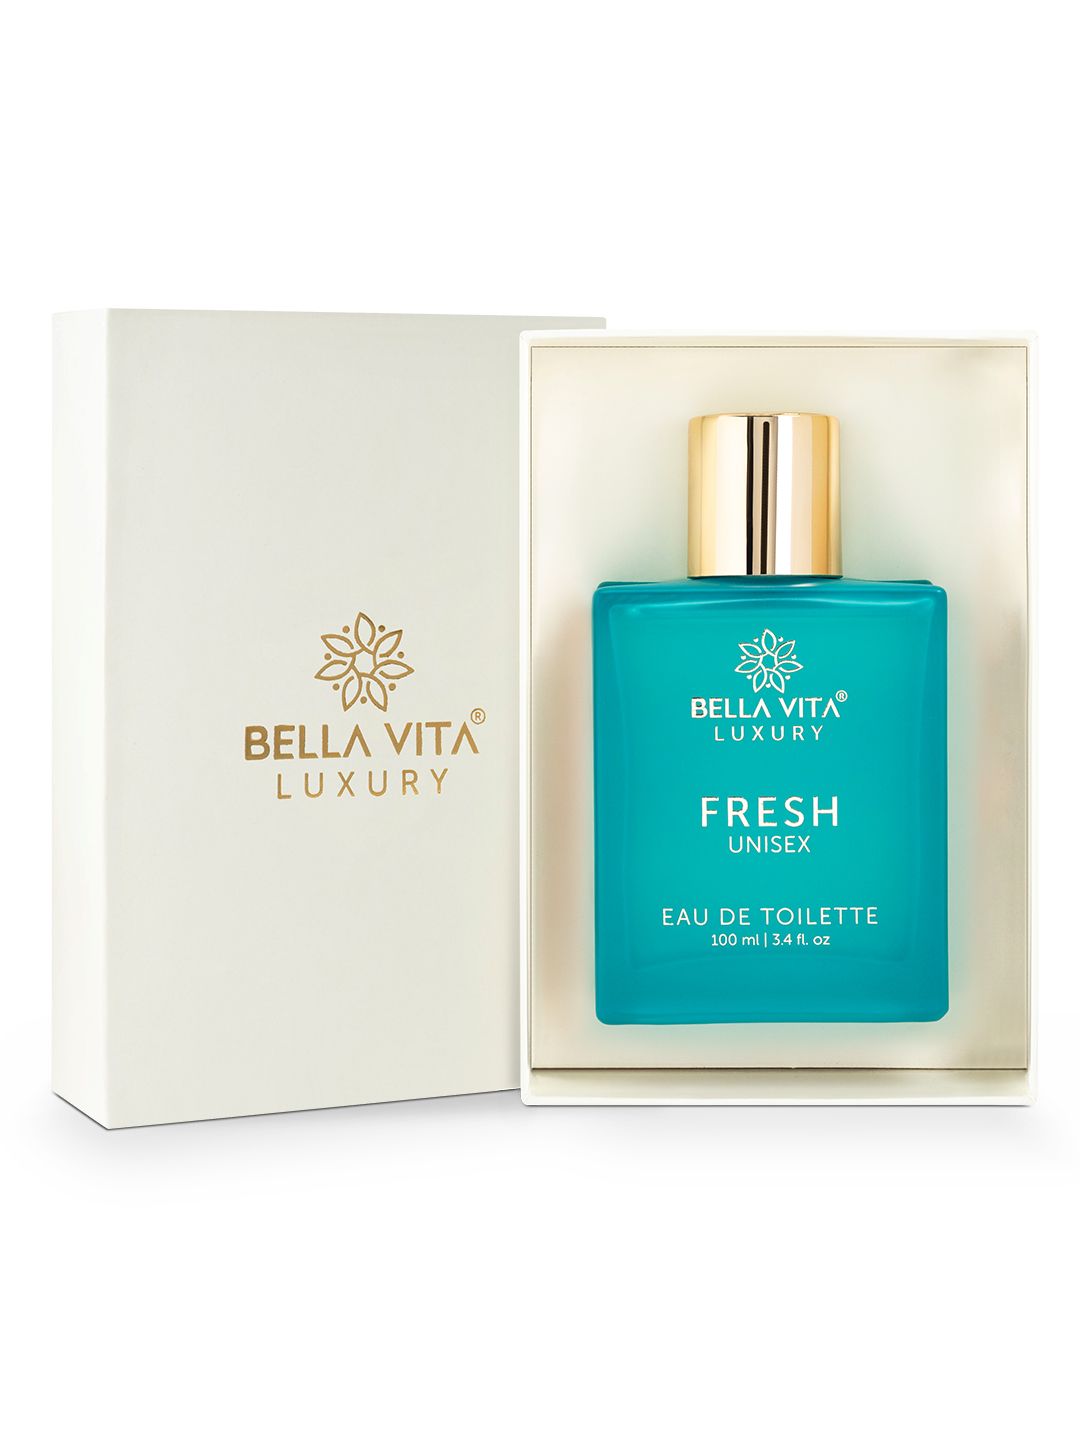 Bella Vita Organic Unisex Fresh Perfume 100 ml Price in India